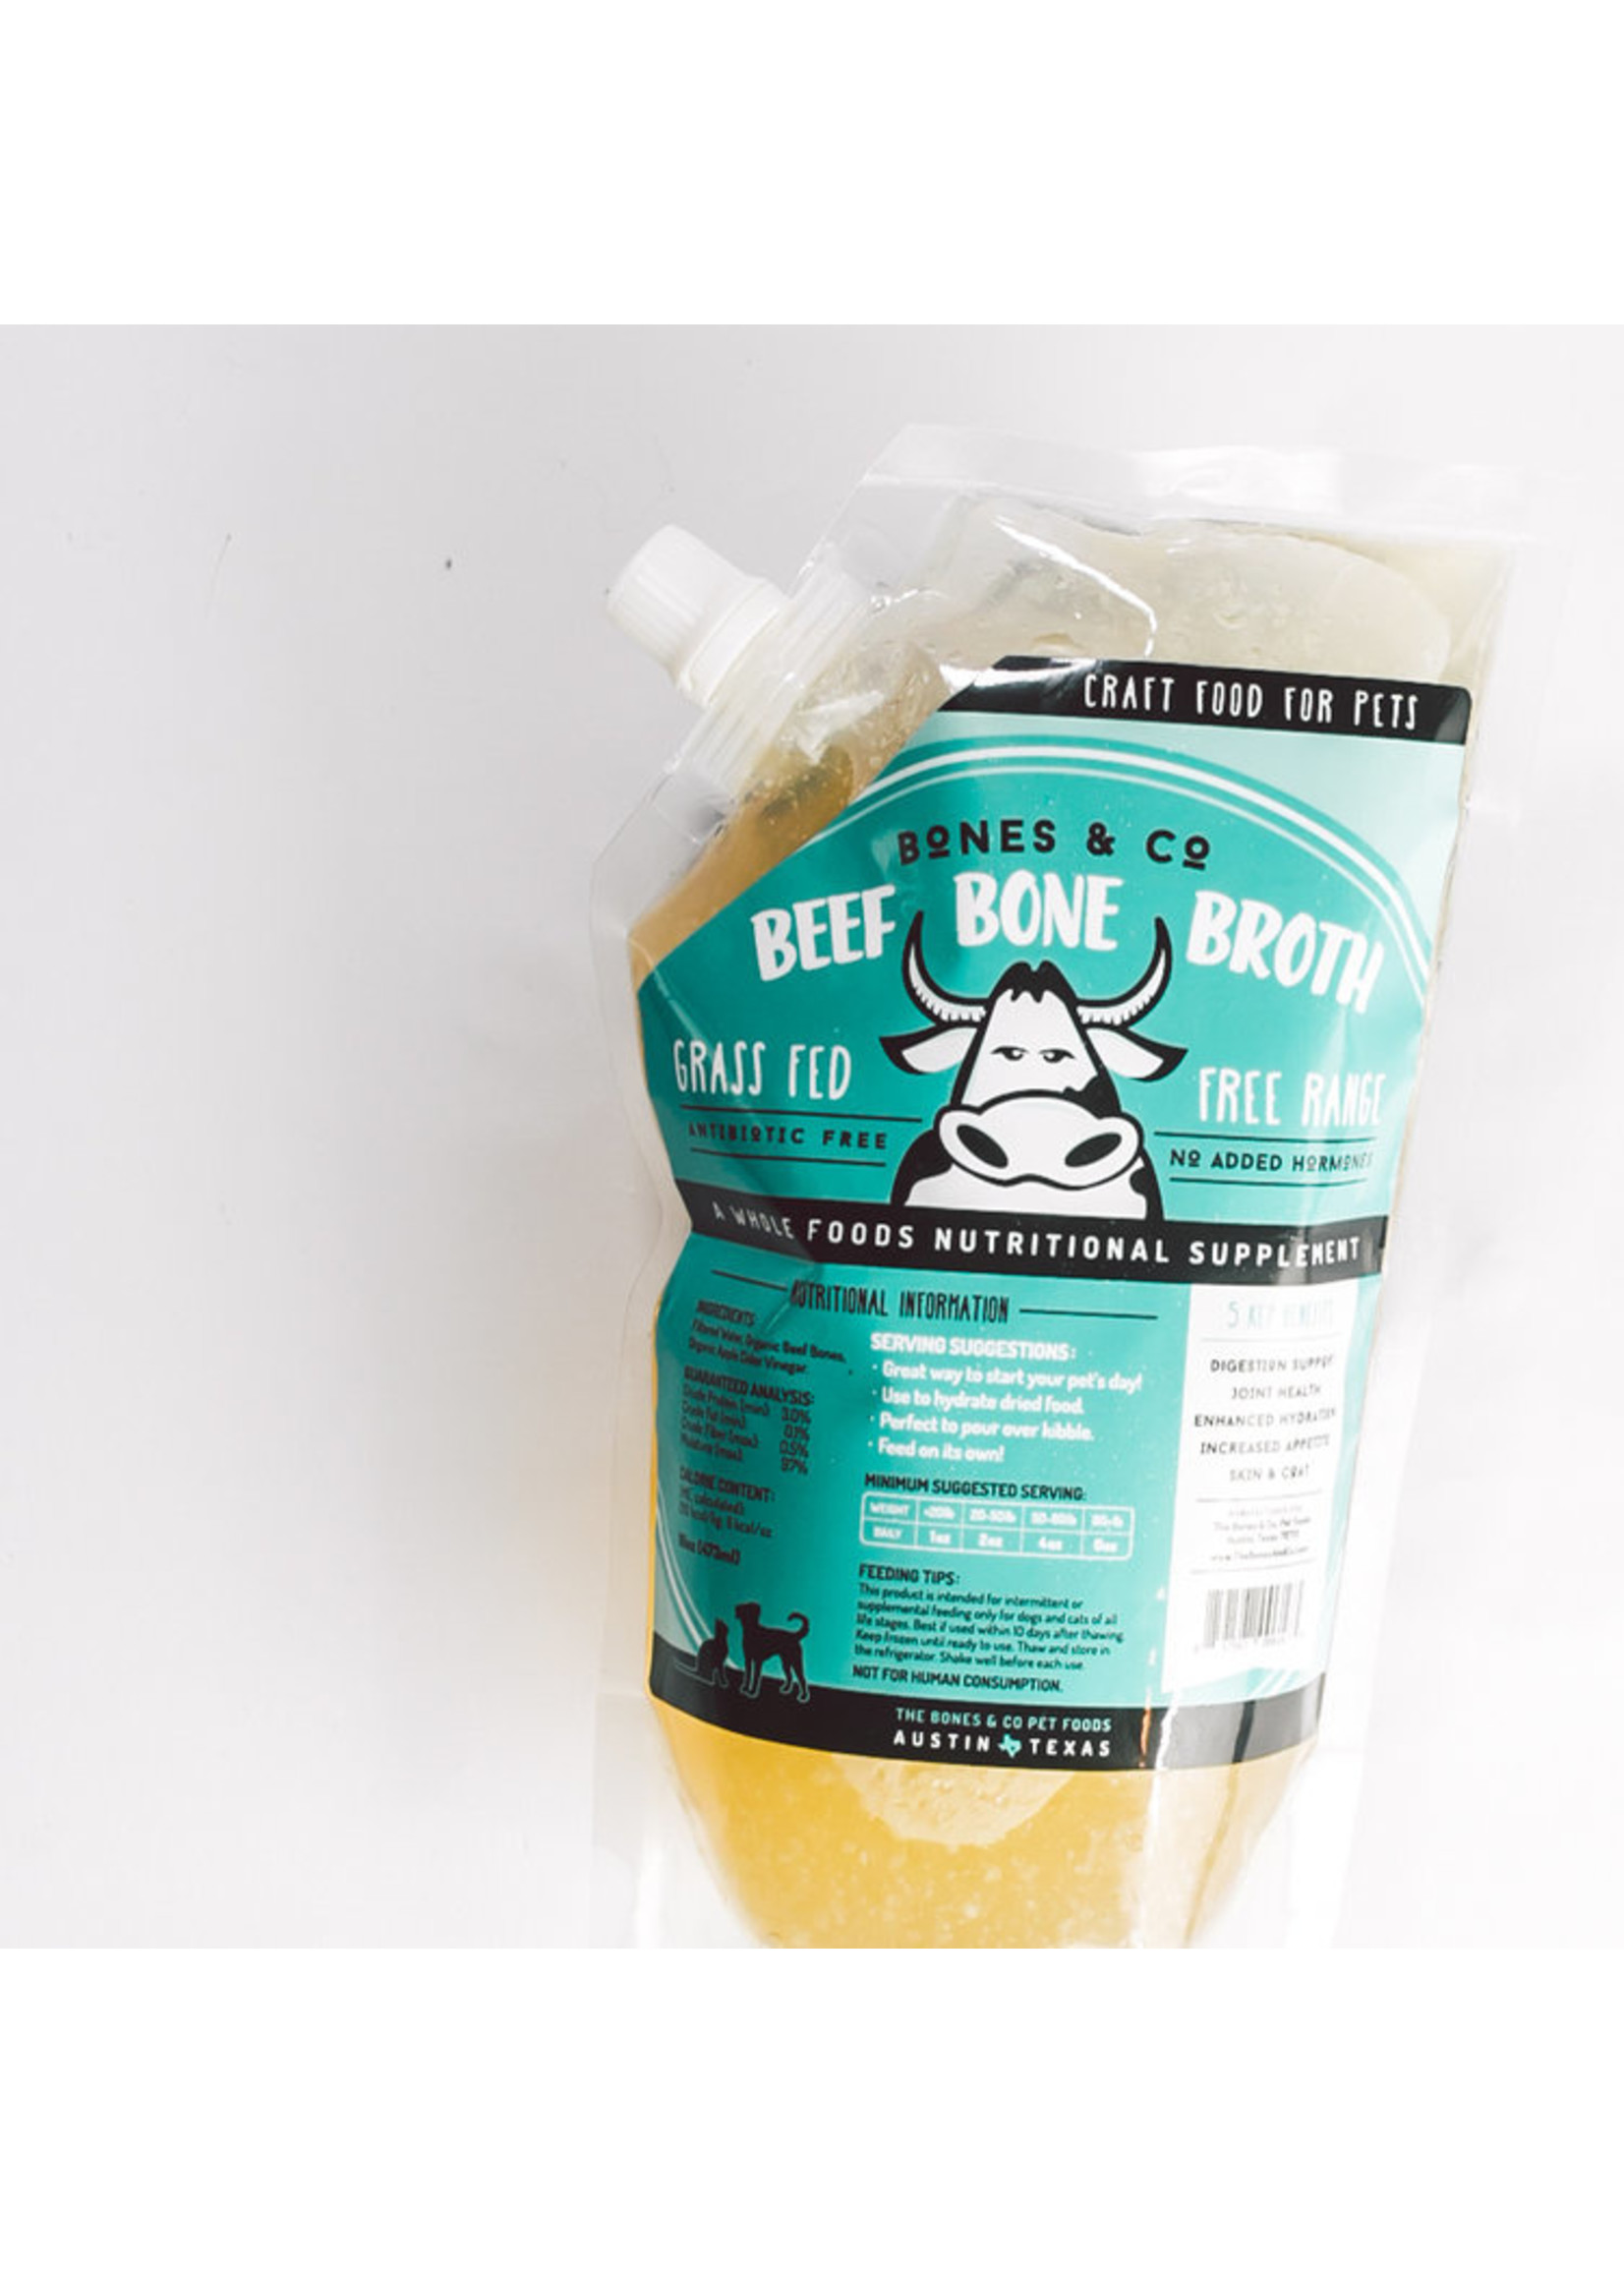 BONES & CO Bones & Co Beef Bone Broth 16 oz.